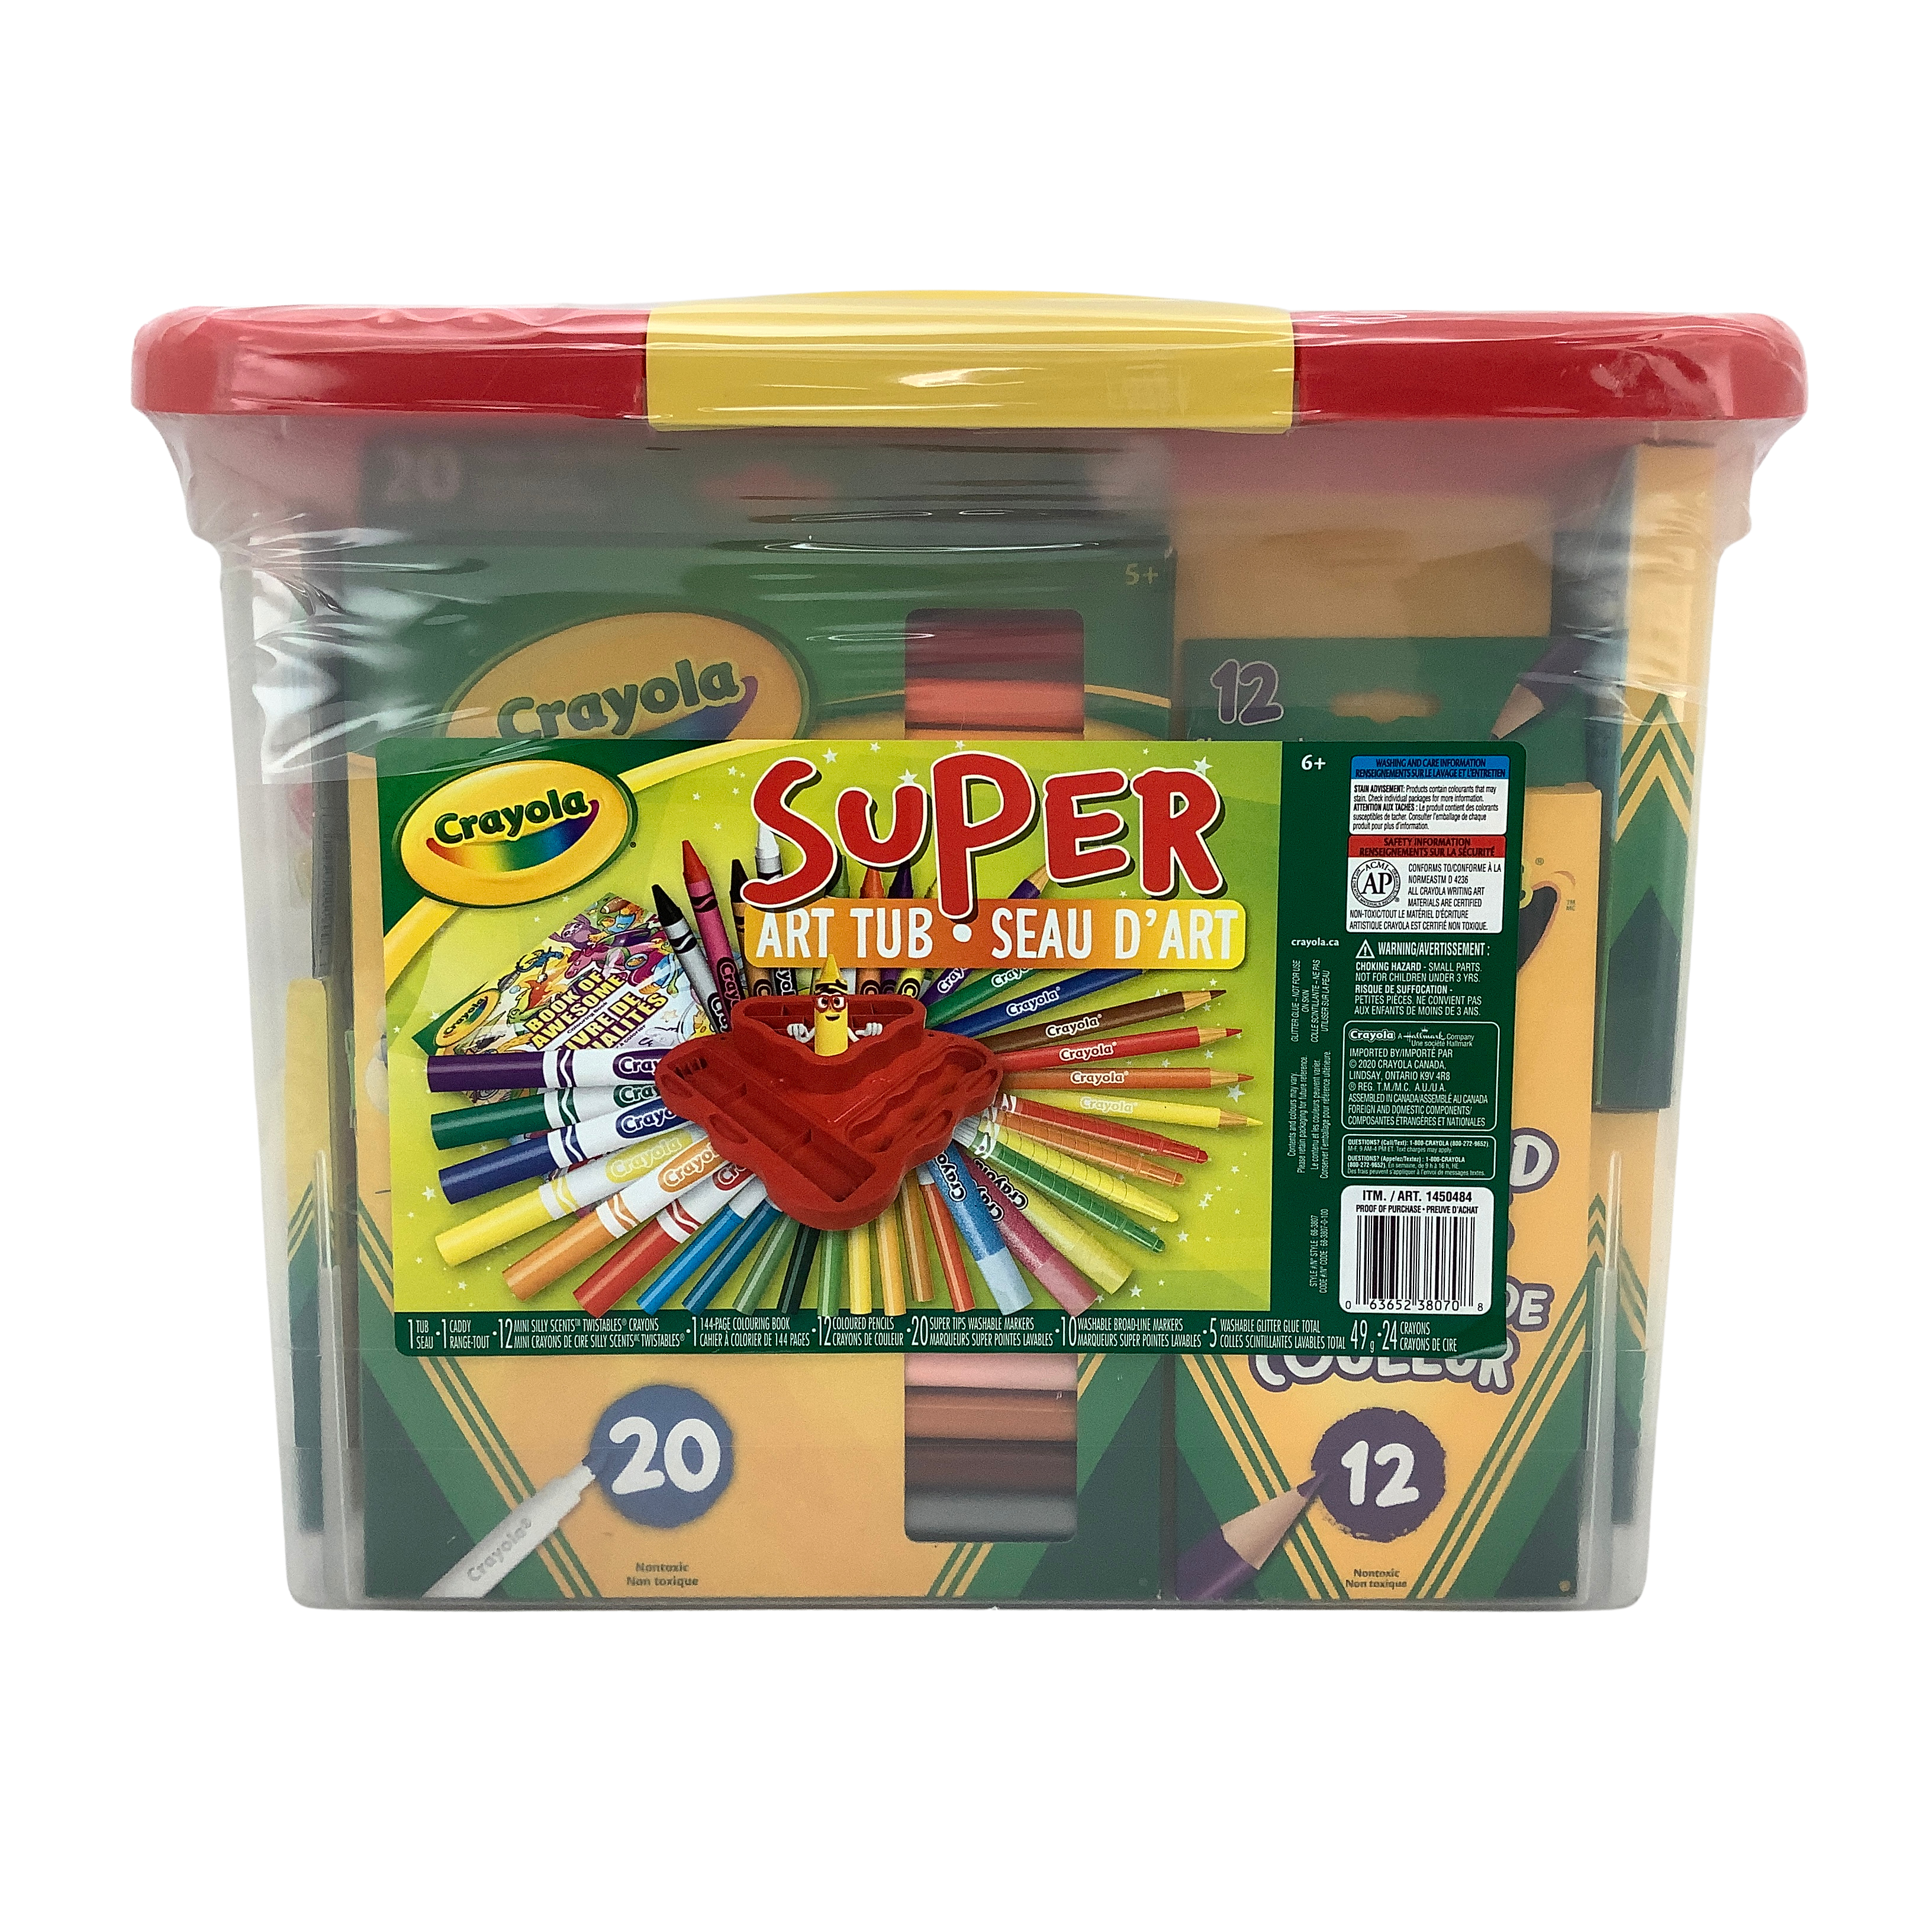 Crayola Super Art Tub / Craft Supplies / Arts and Crafts / Colouring Supplies